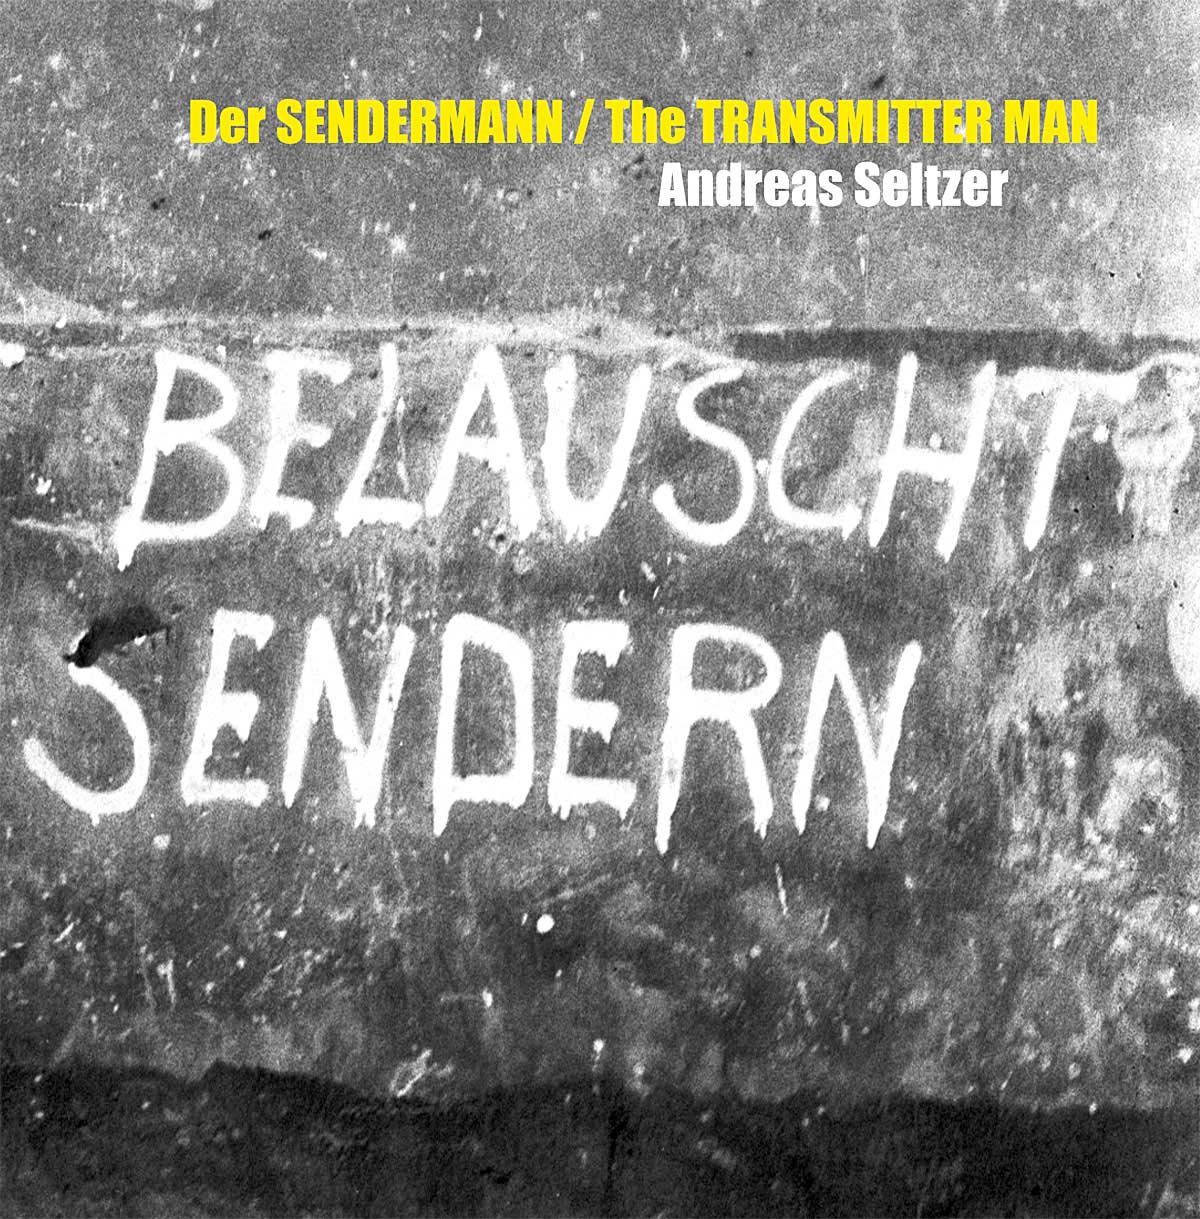 Der Sendermann / The Transmitter Man